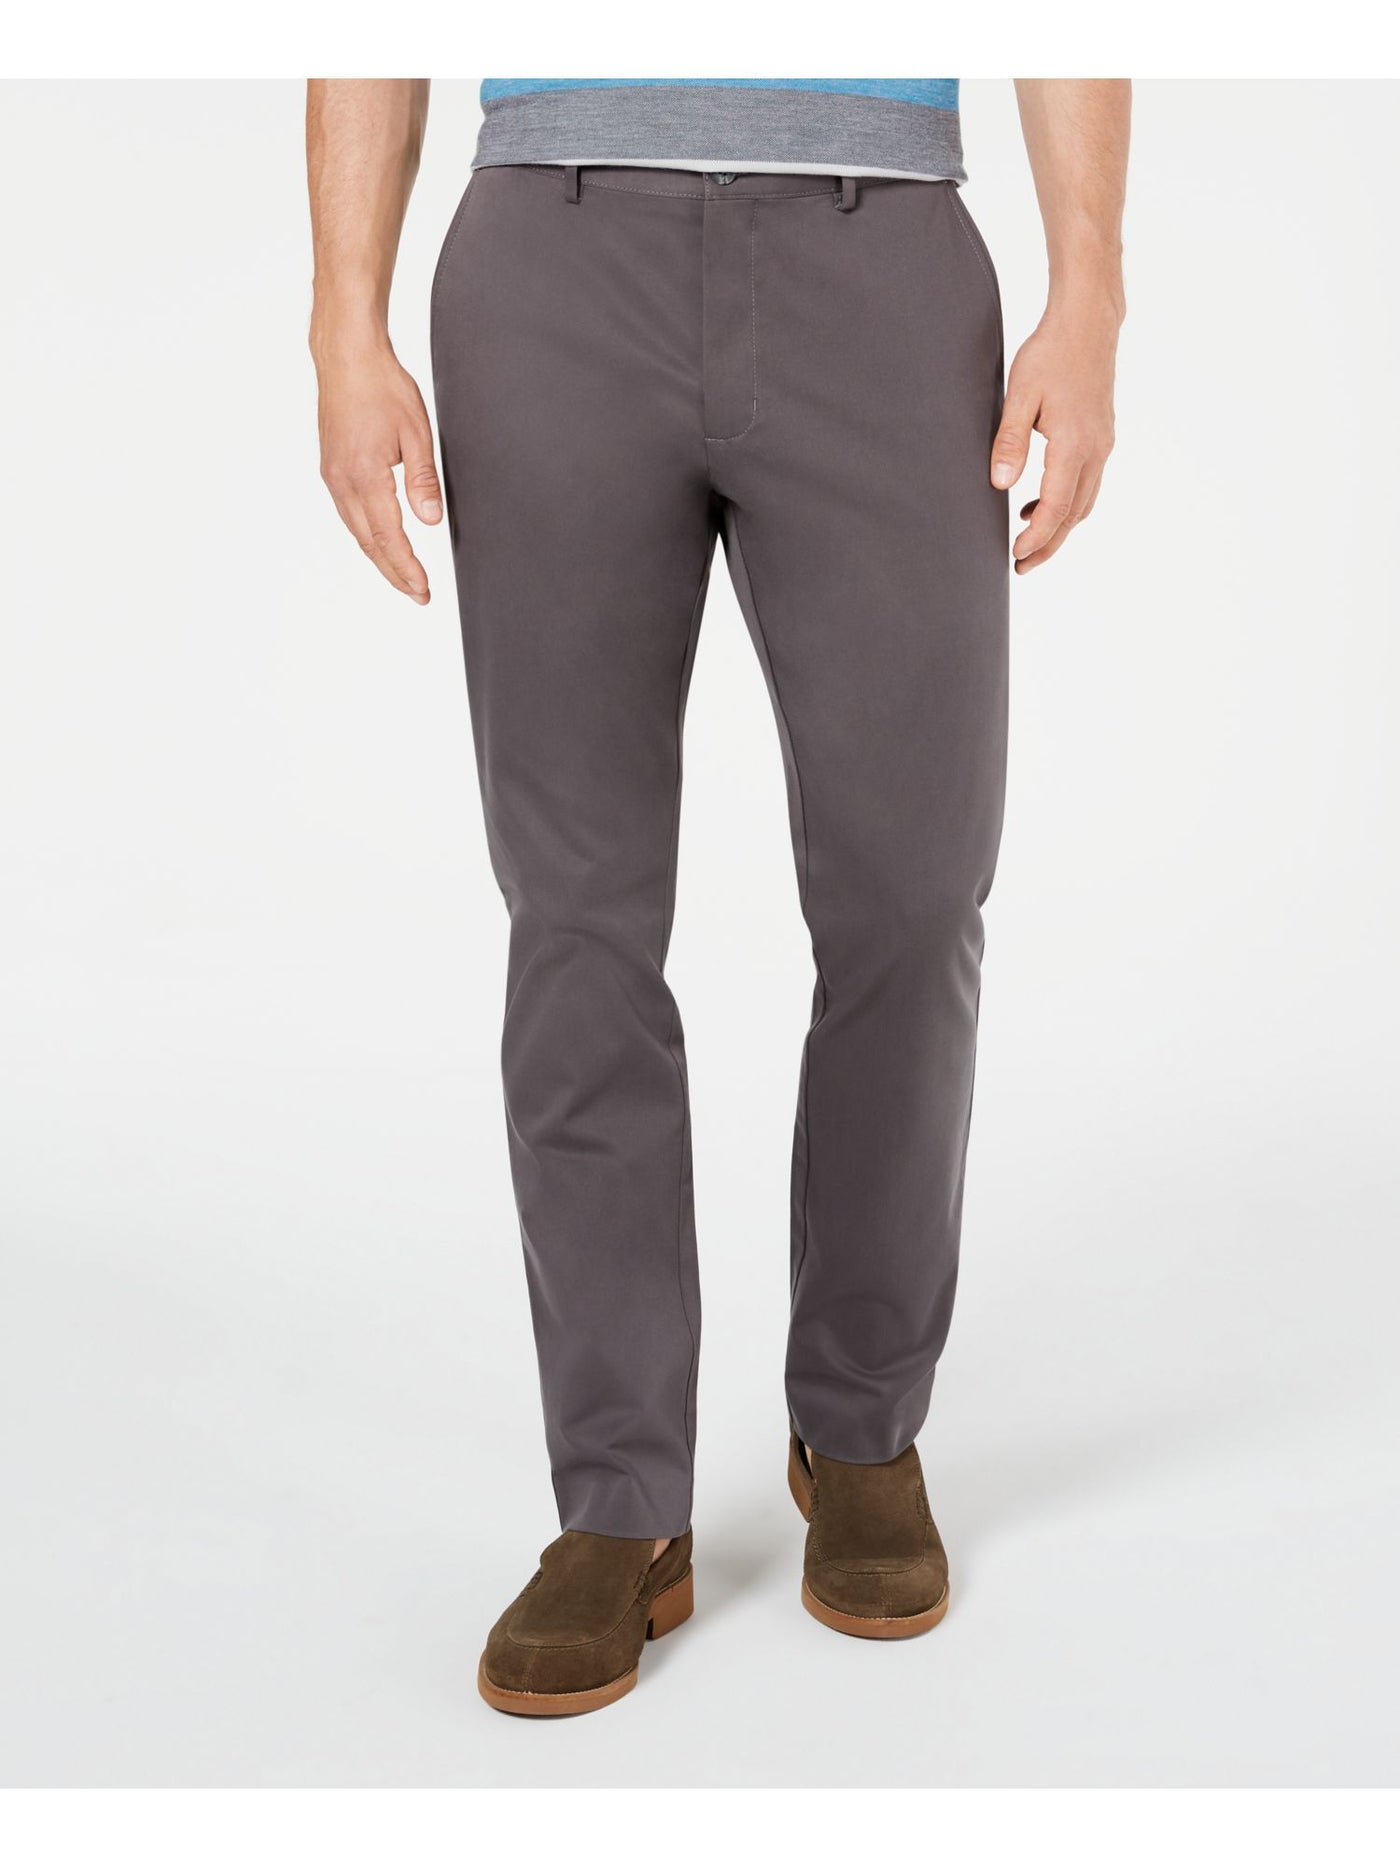 TASSO ELBA Mens Gray Classic Fit Cotton Pants 32W X 30L